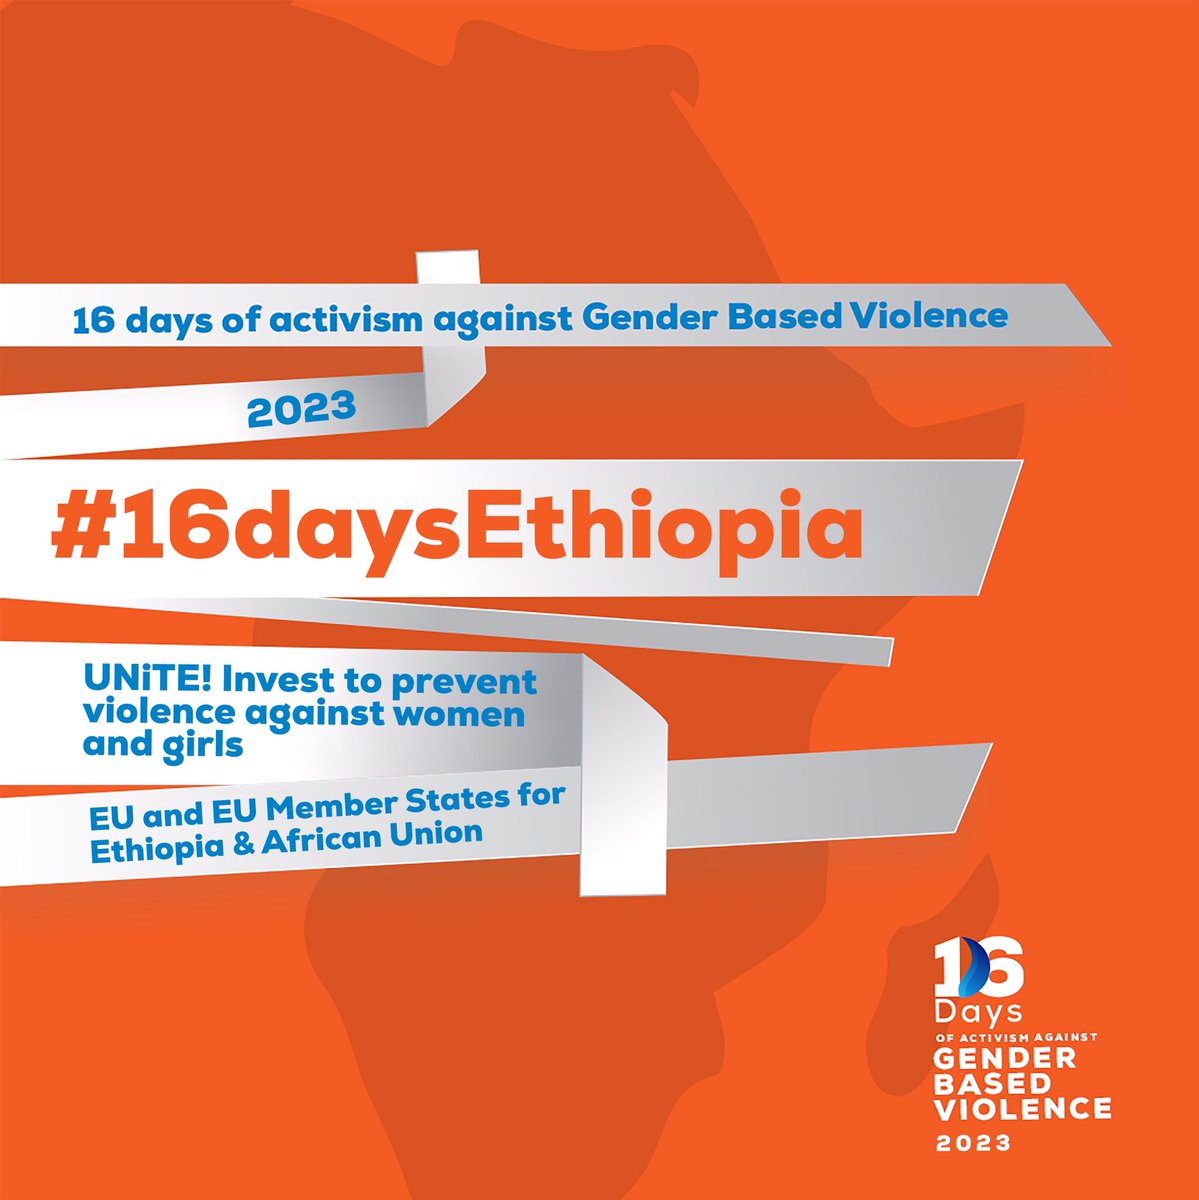 #women እና #girls ላይ የሚደርሰው ጾታን መሰረት ያደረገ ጥቃት በአለም አቀፍ ደረጃ በስፋት የሚፈጸም የሰብአዊ መብት ጥሰት ነው። በ #16Days of Activism against #GBV ቅስቀሳ ላይ #GBVን #HumanRightsApproach በመጠቀም እንዋጋለን። #16daysEthiopia